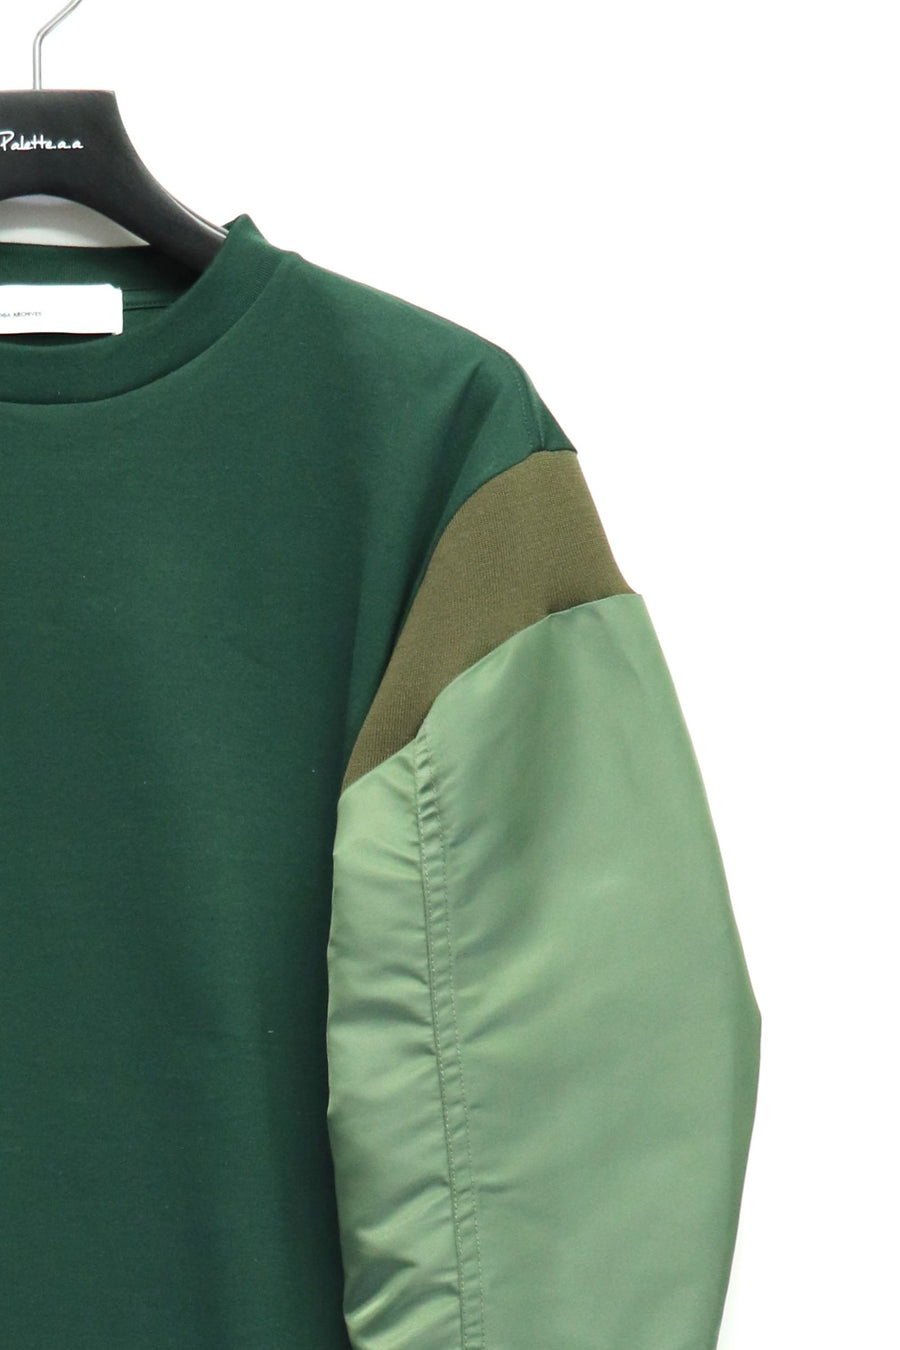 TOGA VIRILIS  Cotton jersey L/S(GREEN)